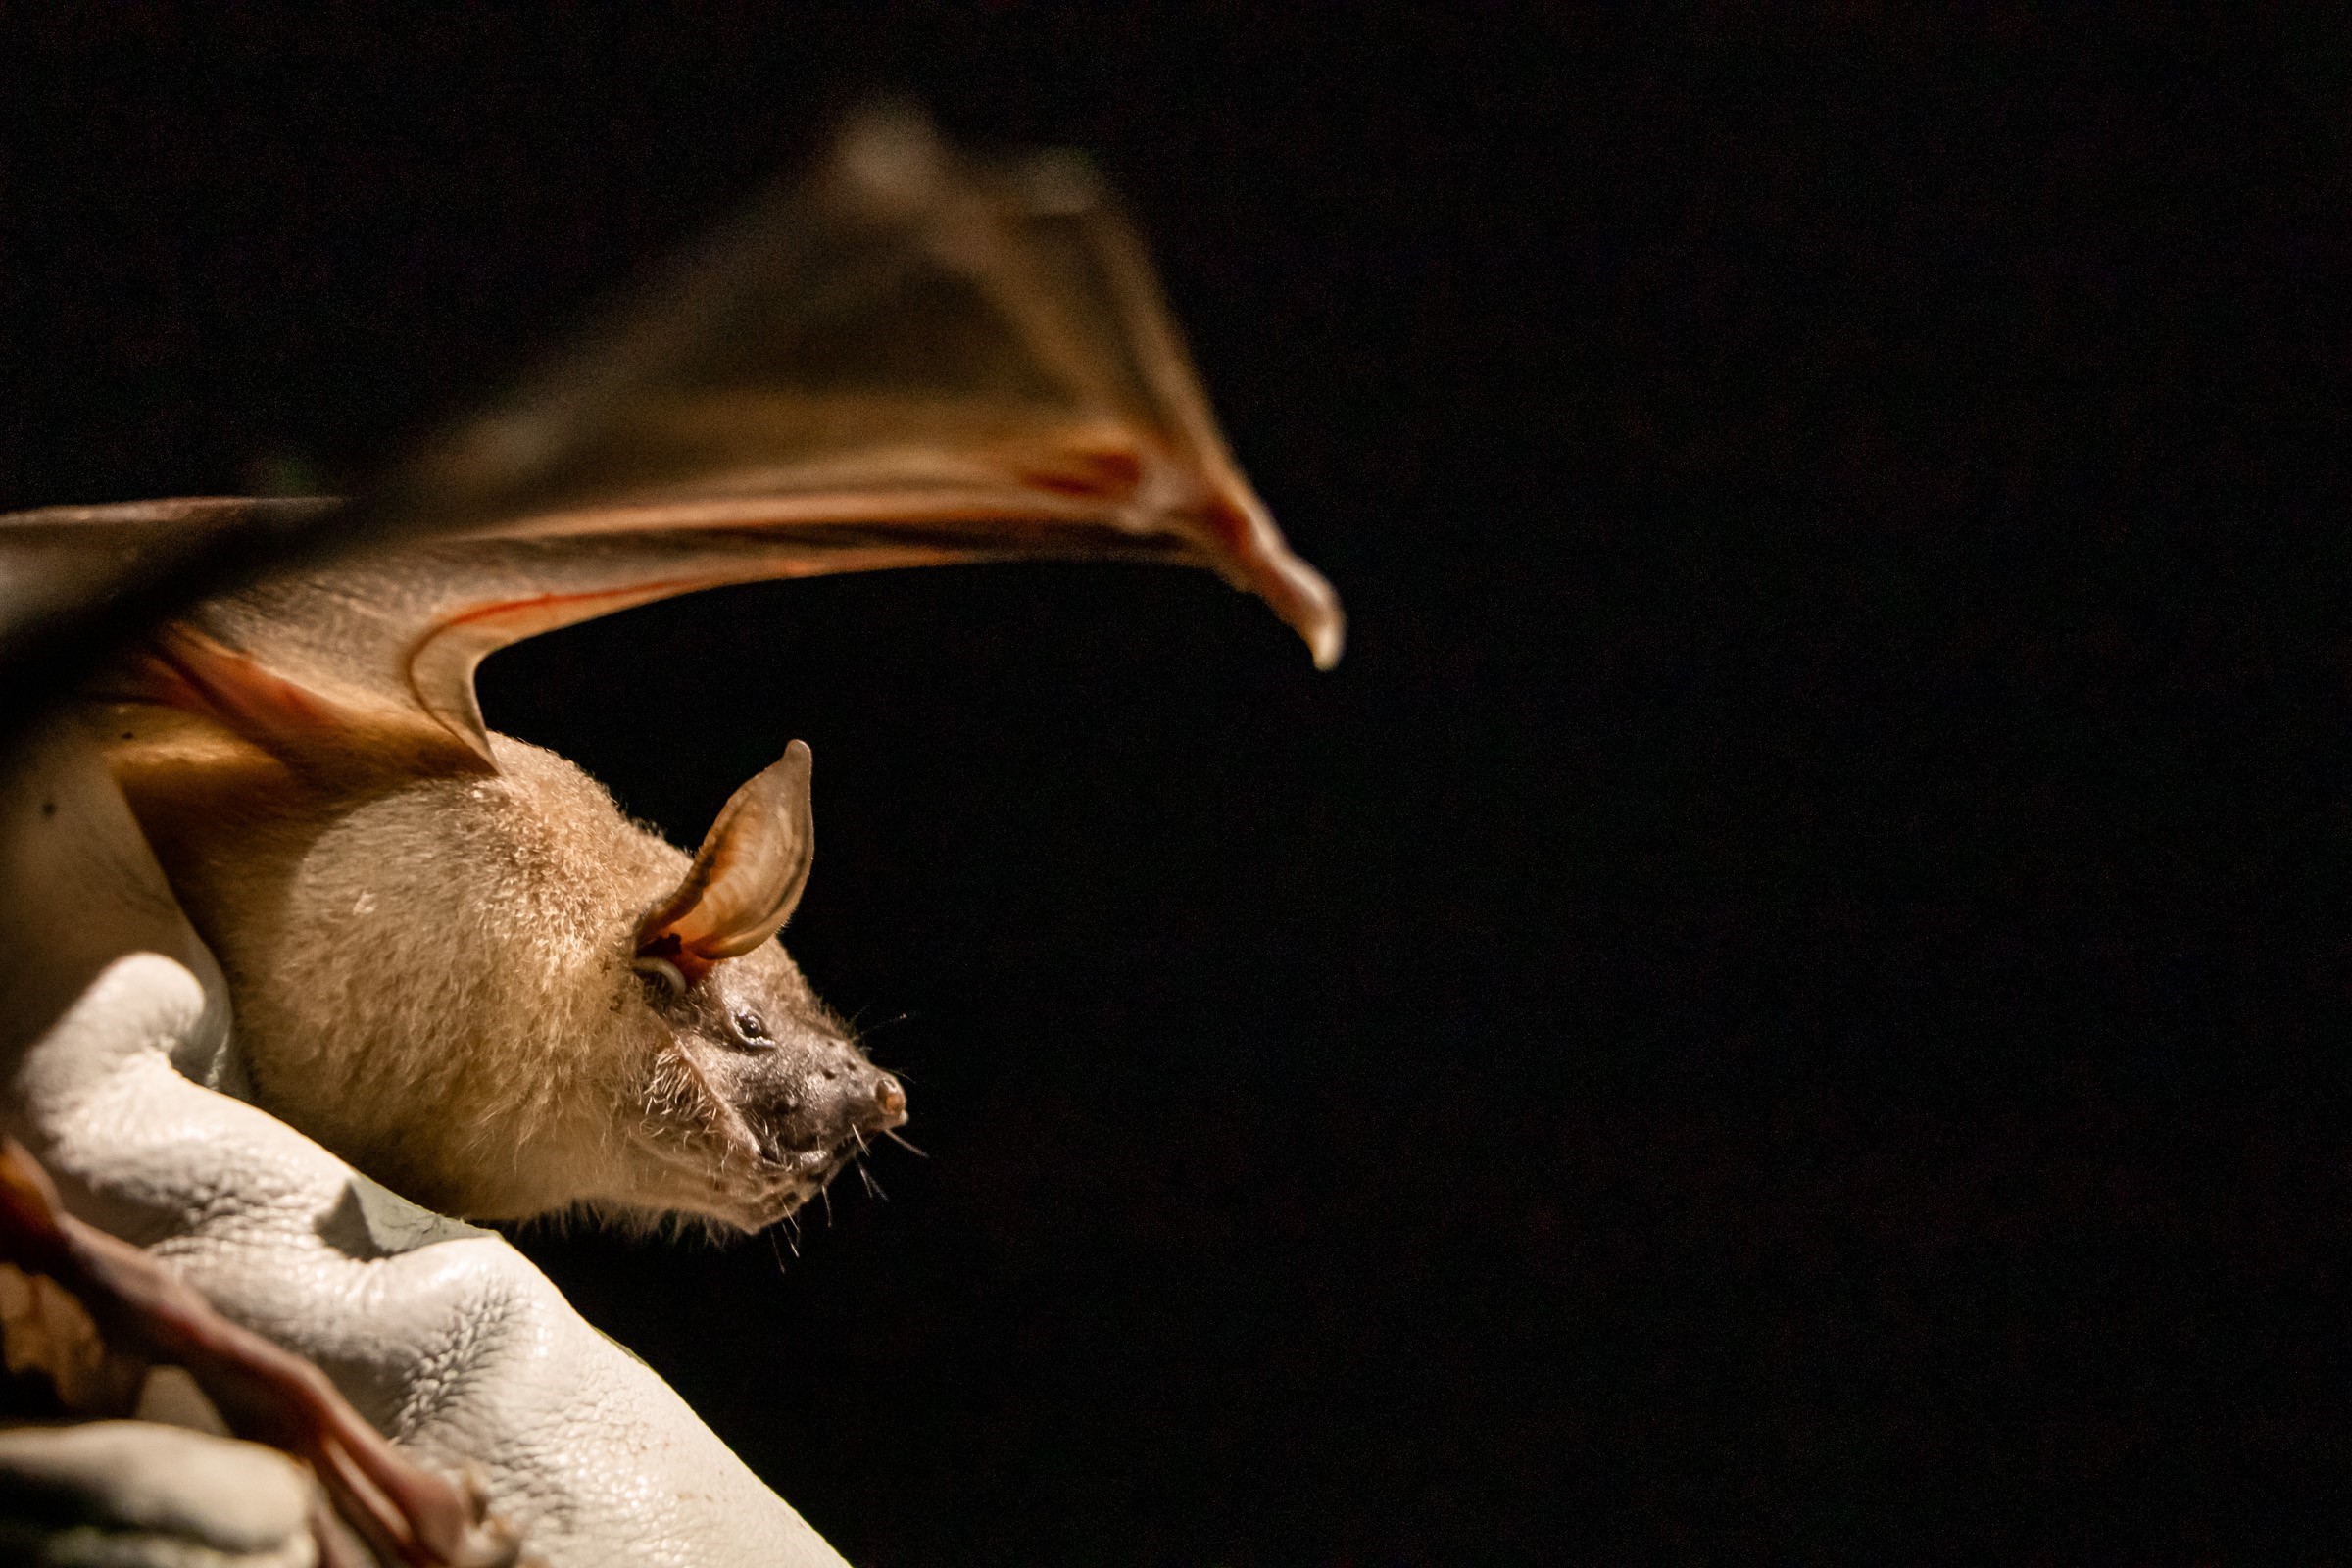 Fishing bat. (Photo by William Stelzer)